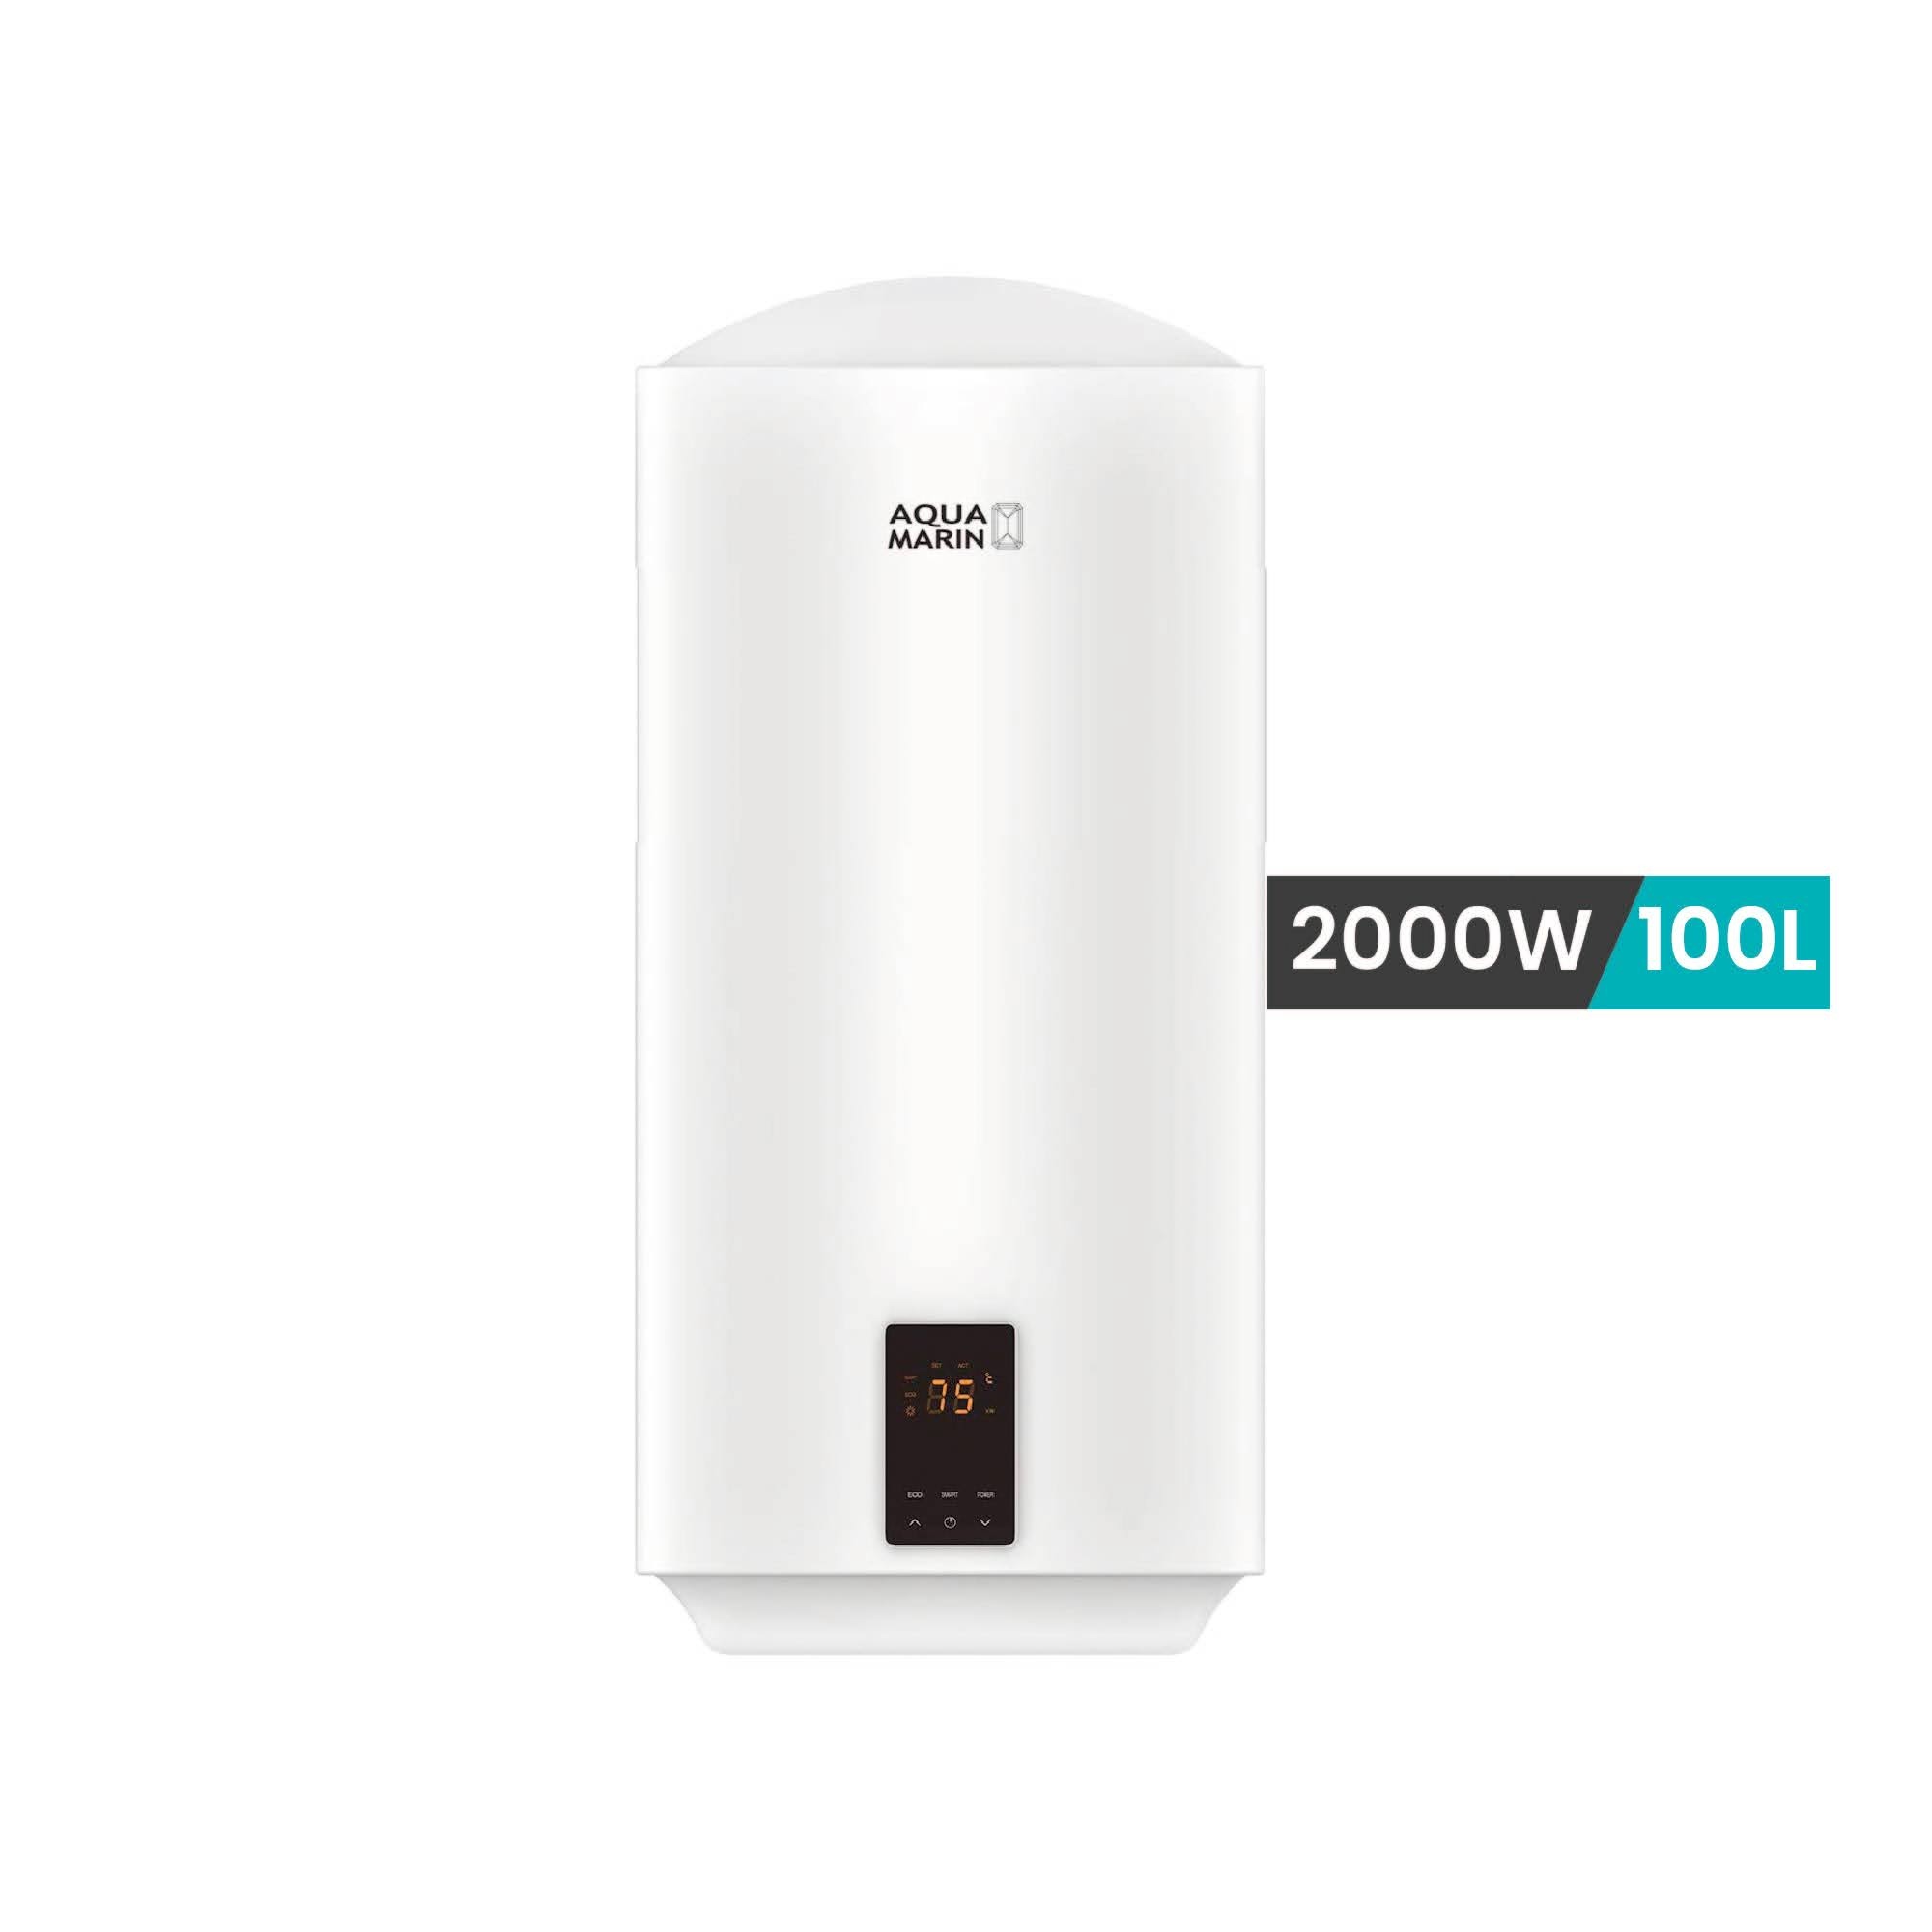 Aquamarin smart boiler – 100 liter – 2000W